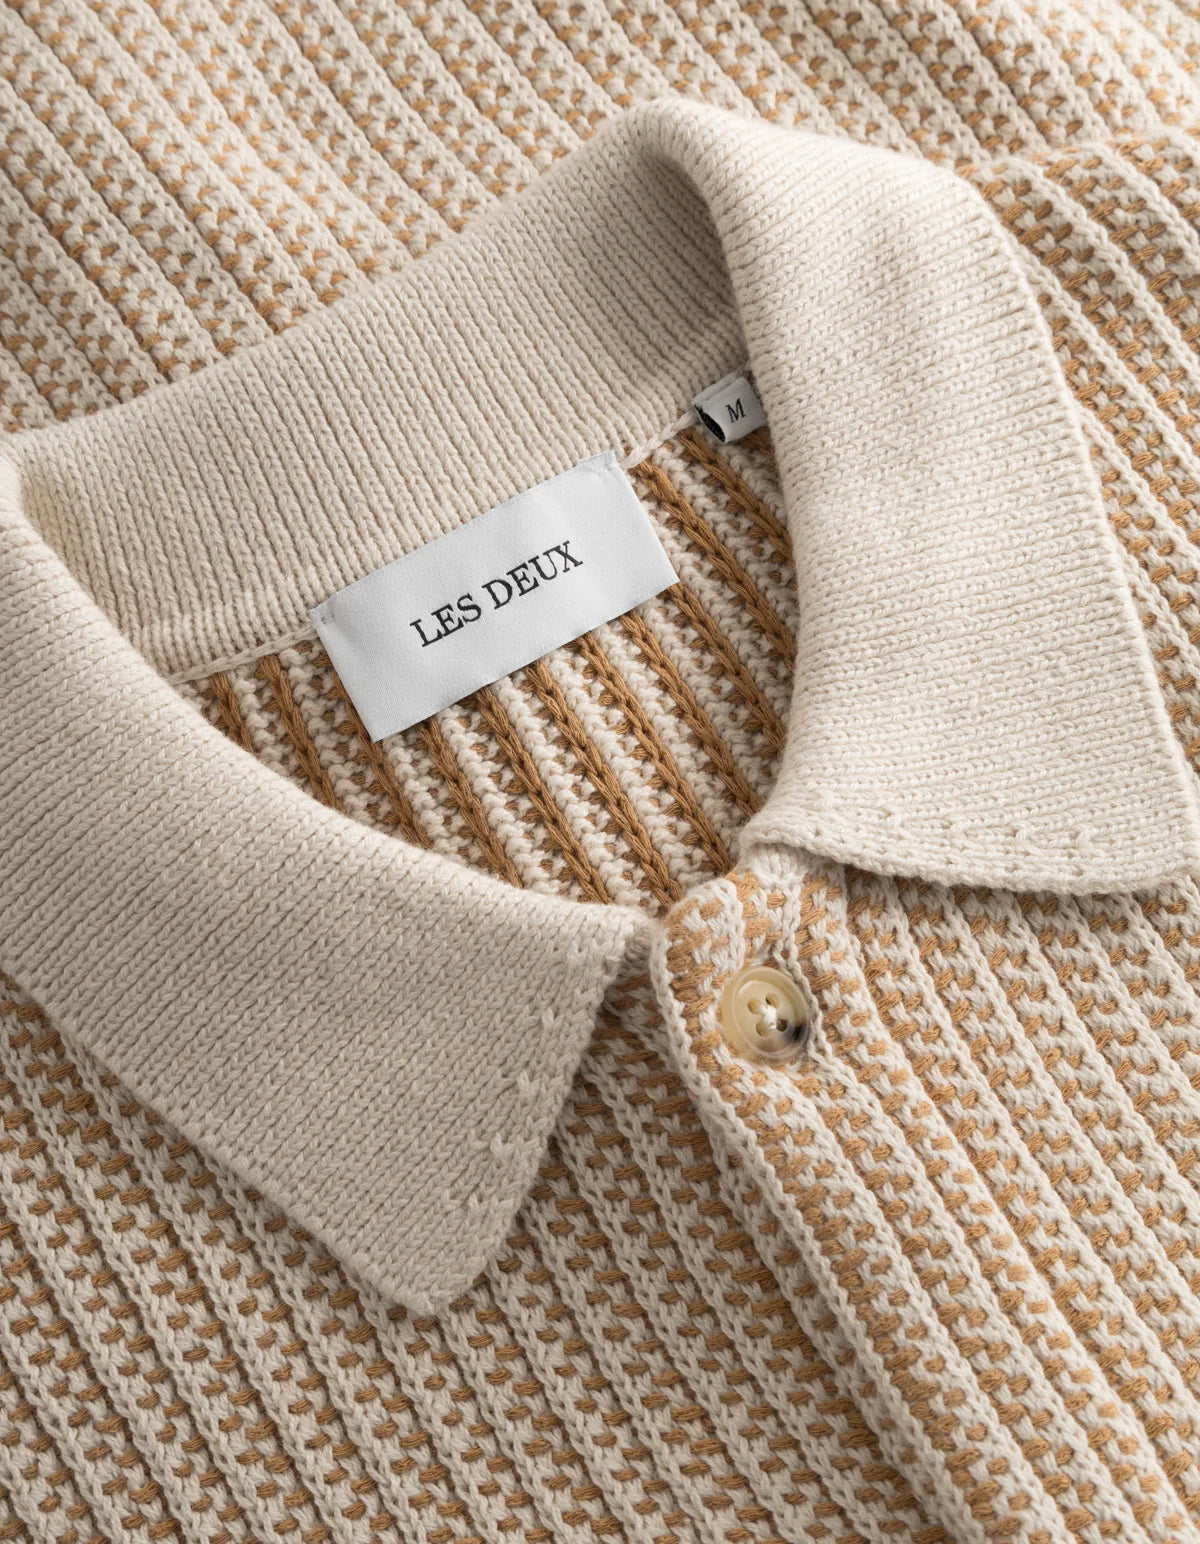 Easton knitted shirt camel/ivory - Les Deux Copenhagen